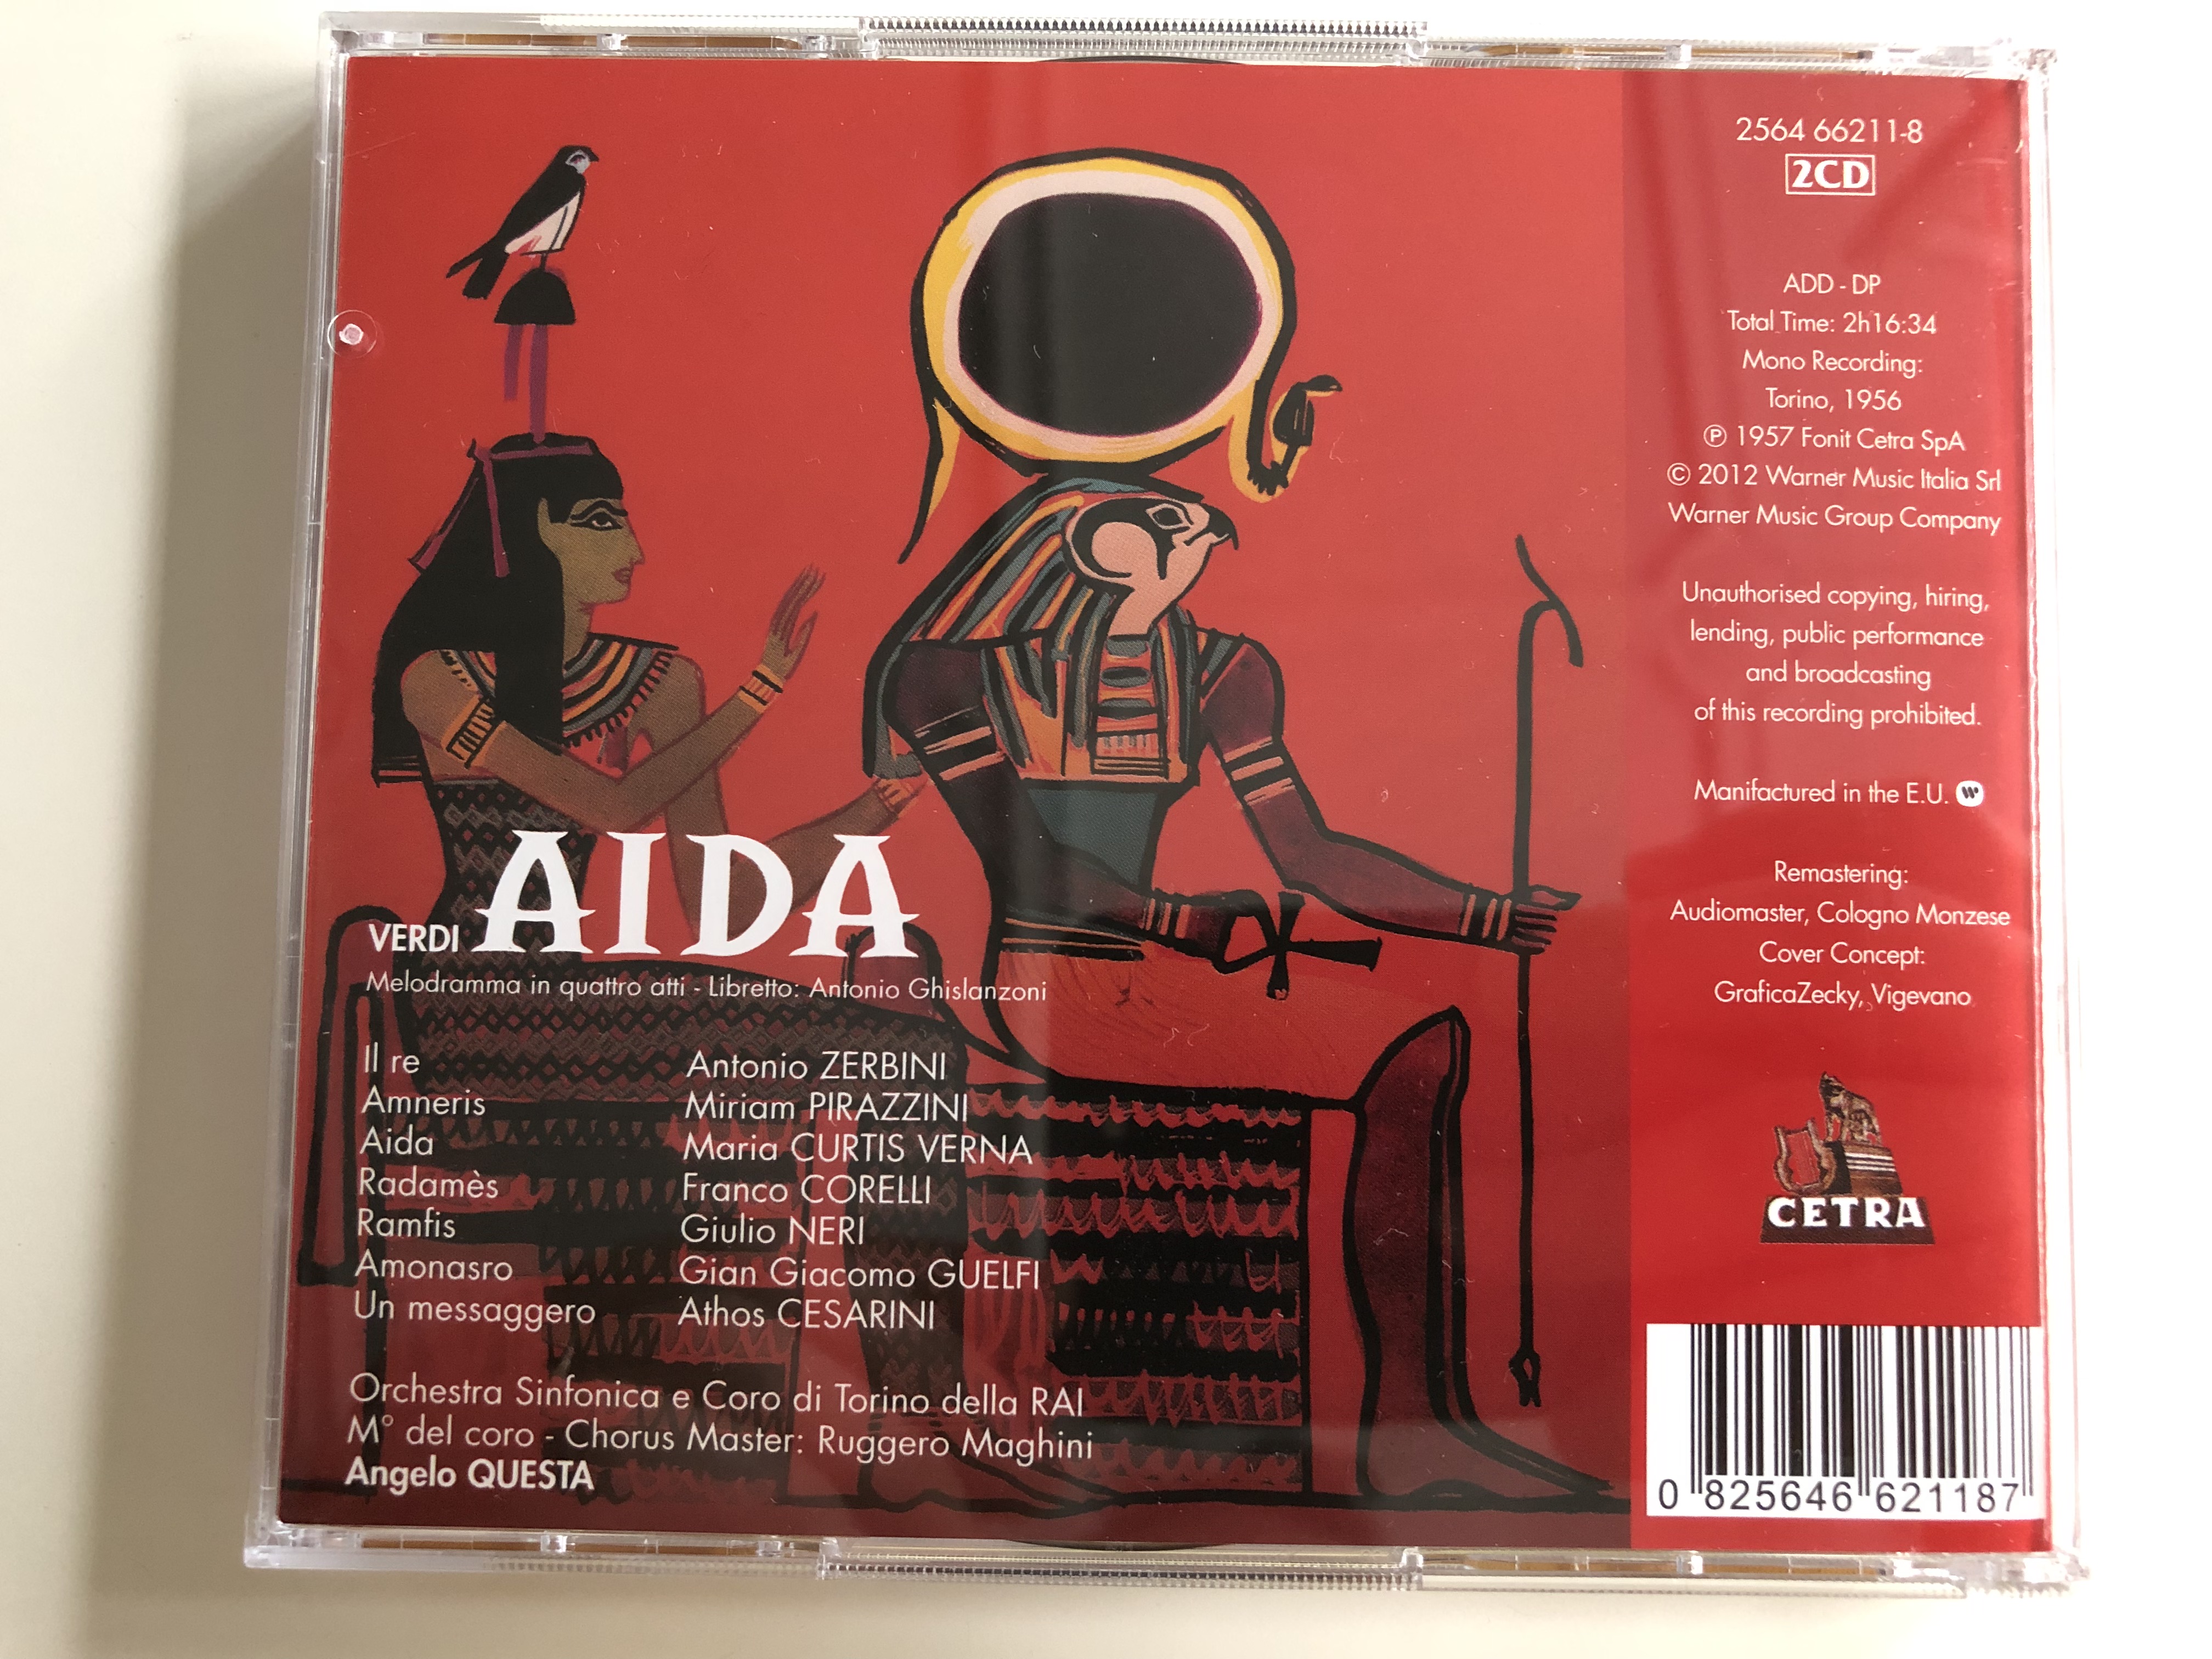 giuseppe-verdi-aida-cetra-verdi-collection-warner-music-italy-audio-cd-2012-2564-66211-8-12-.jpg